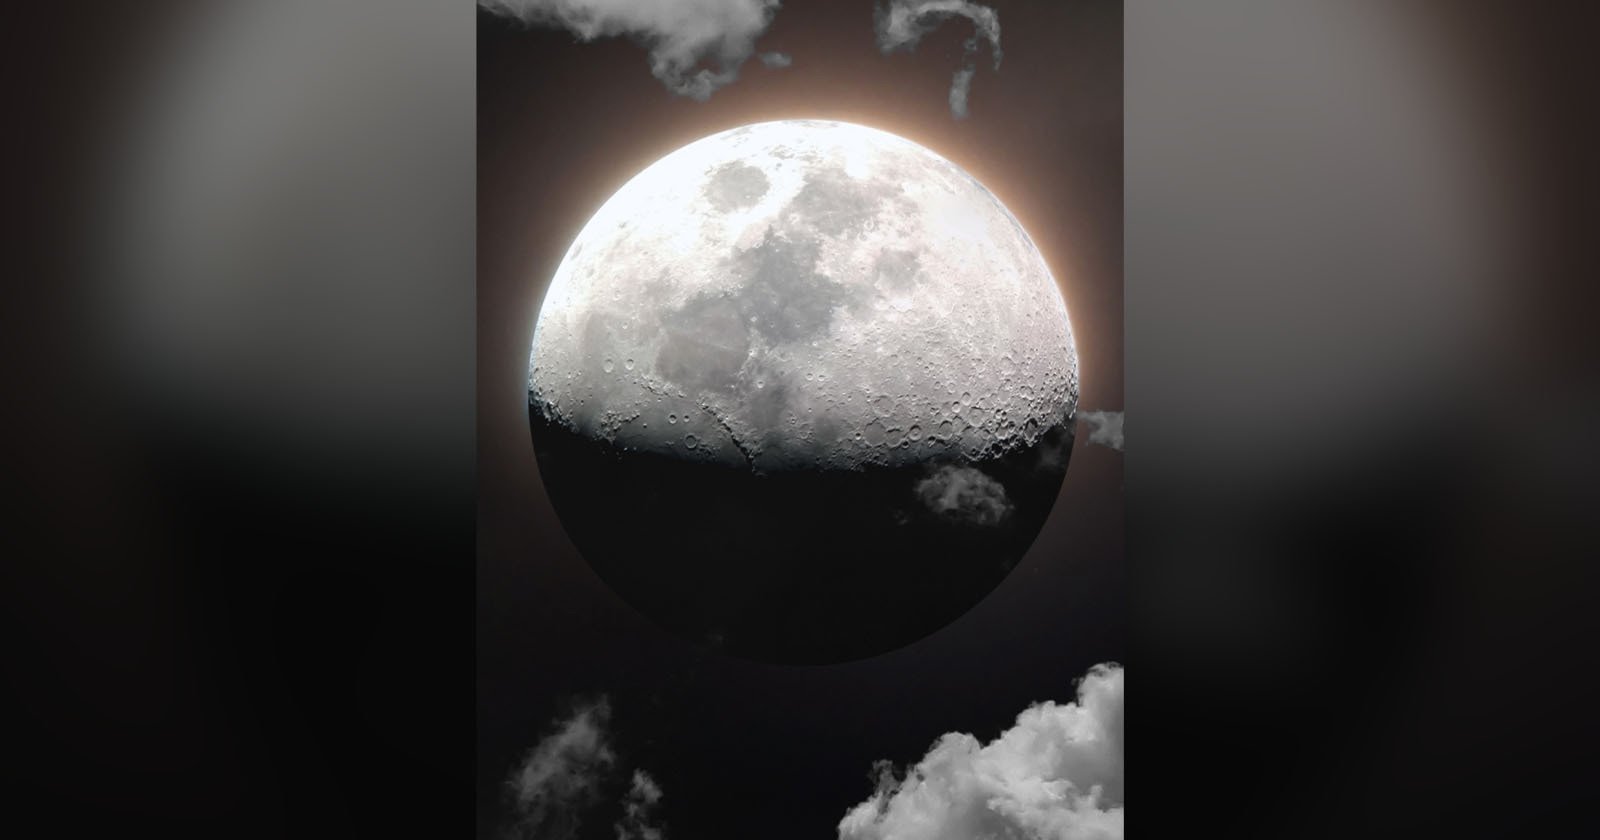  teen photographer captures incredible moon photo his 